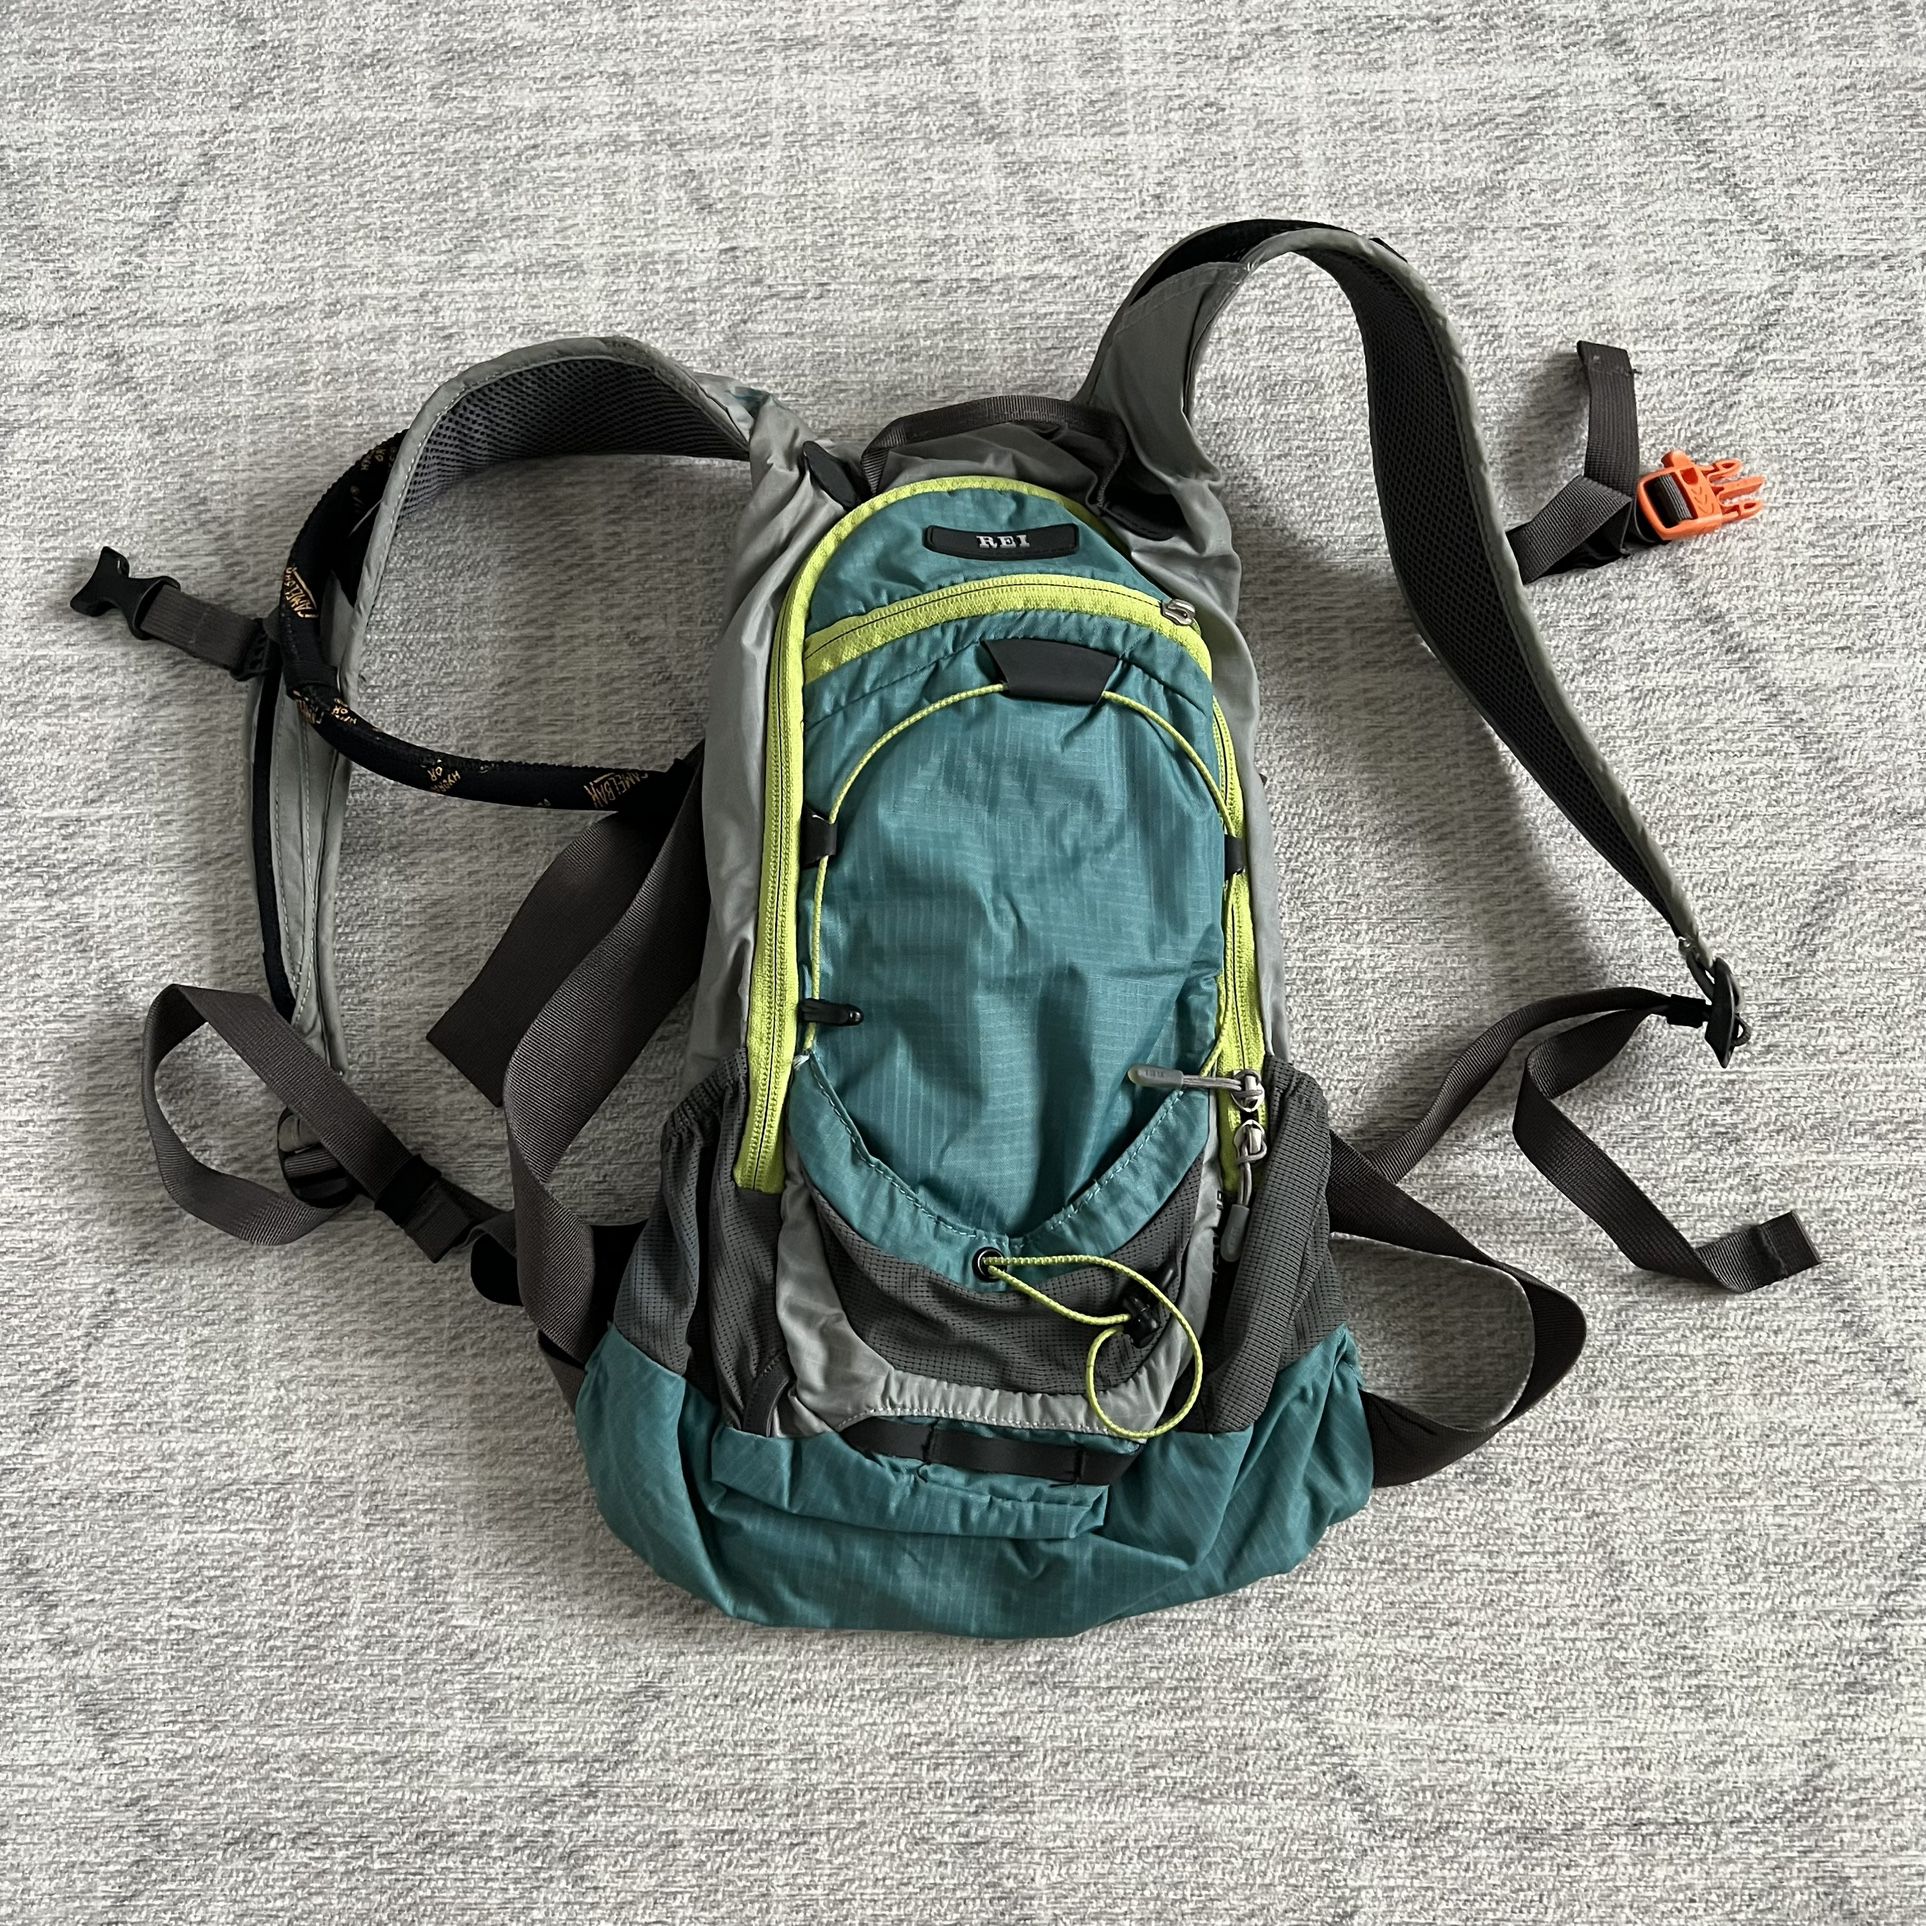 REI Stoke 19 Teal Green Camping Hiking Backpacking Hydration Bag w/ 50oz Bladder